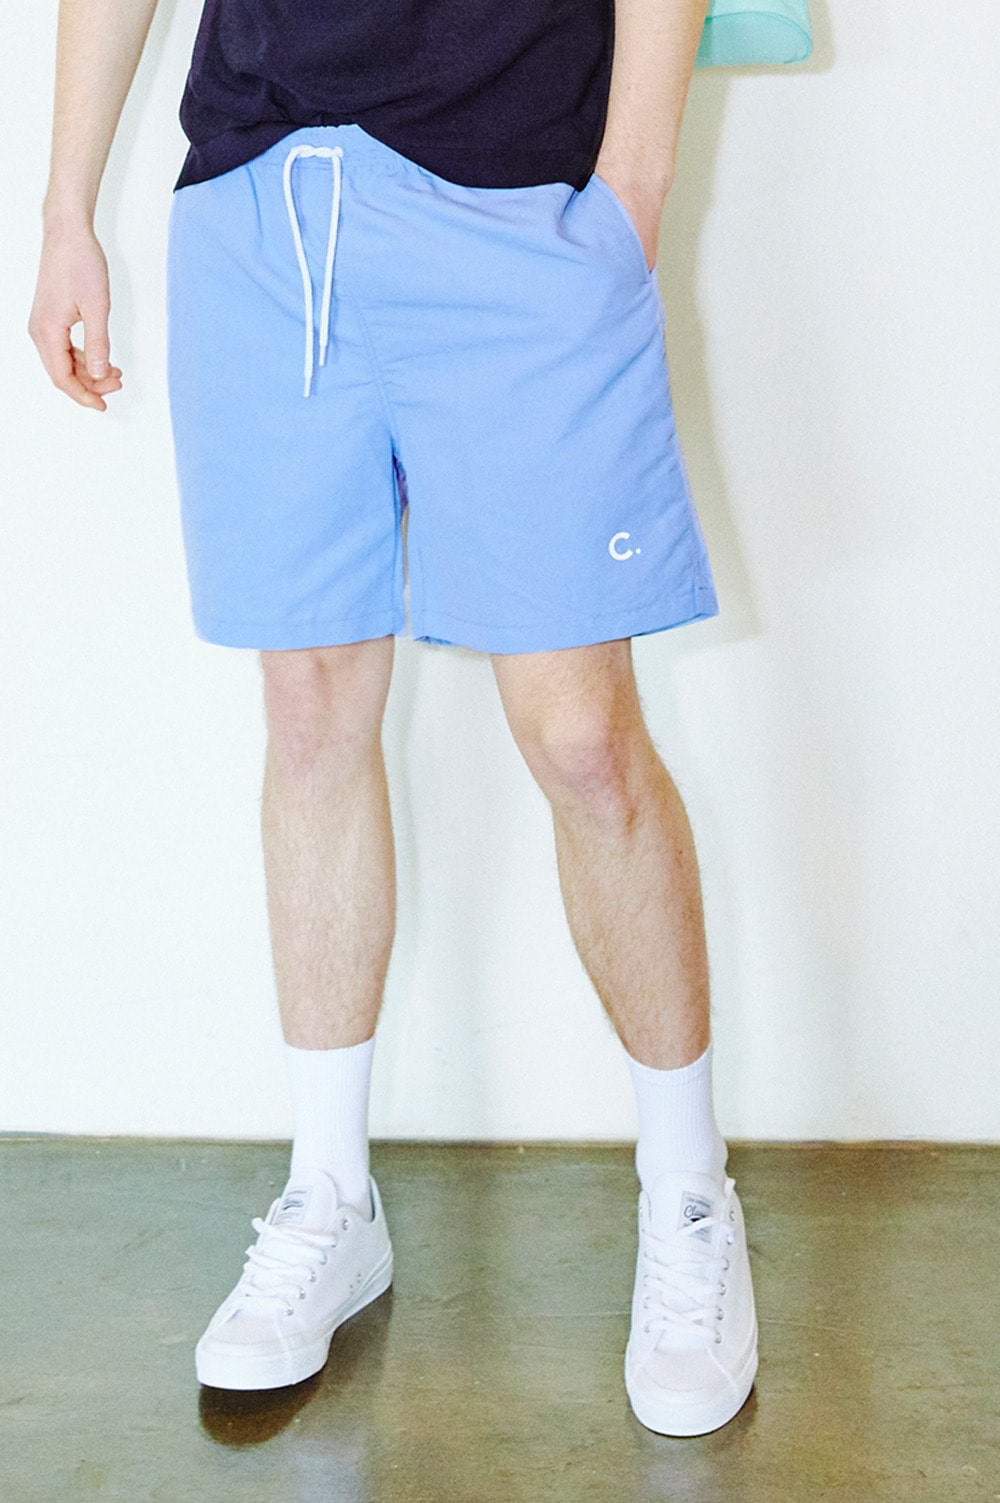 clove - Summer Shorts_Men (Lavender)